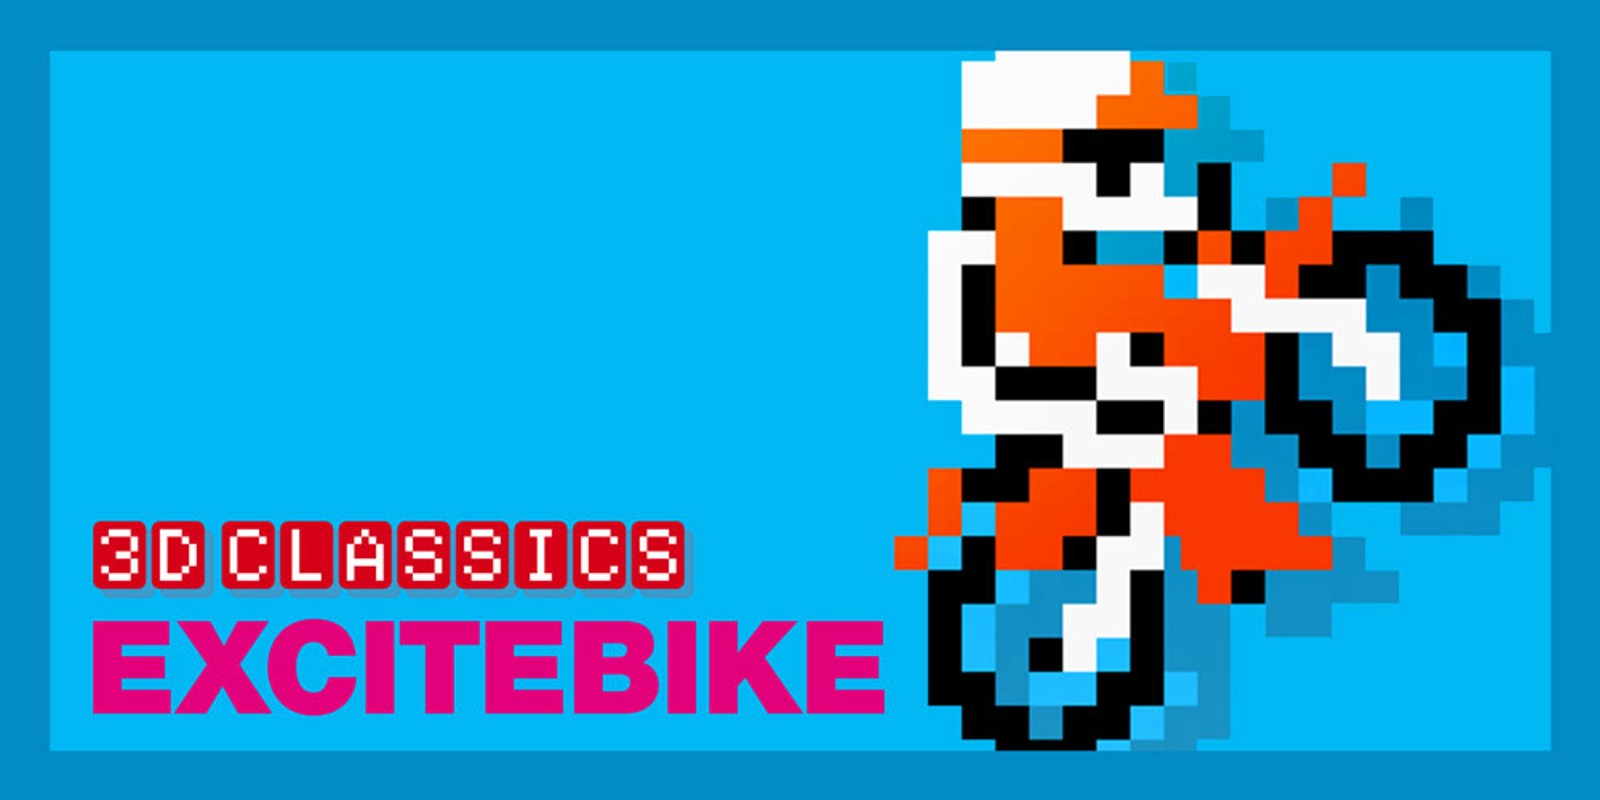 play excitebike online free